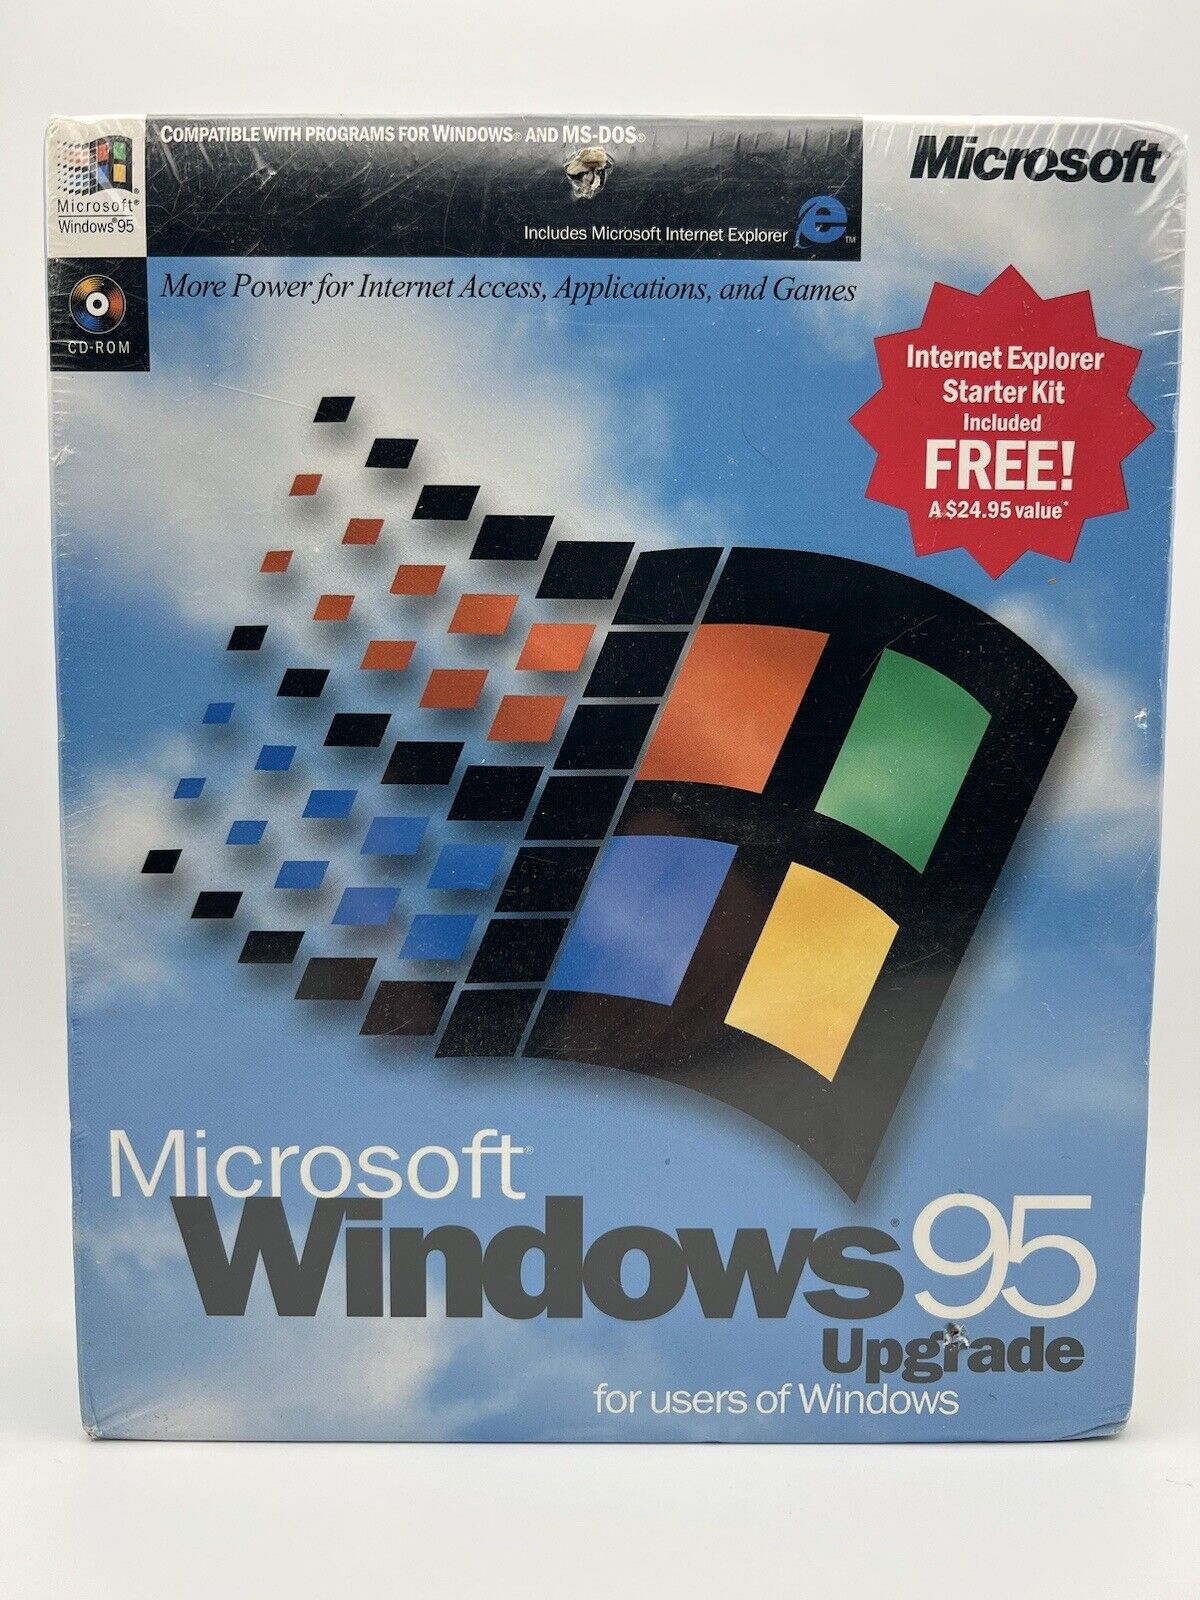 Microsoft Windows 95 Upgrade with Internet Explorer Starter kit New Damaged Box